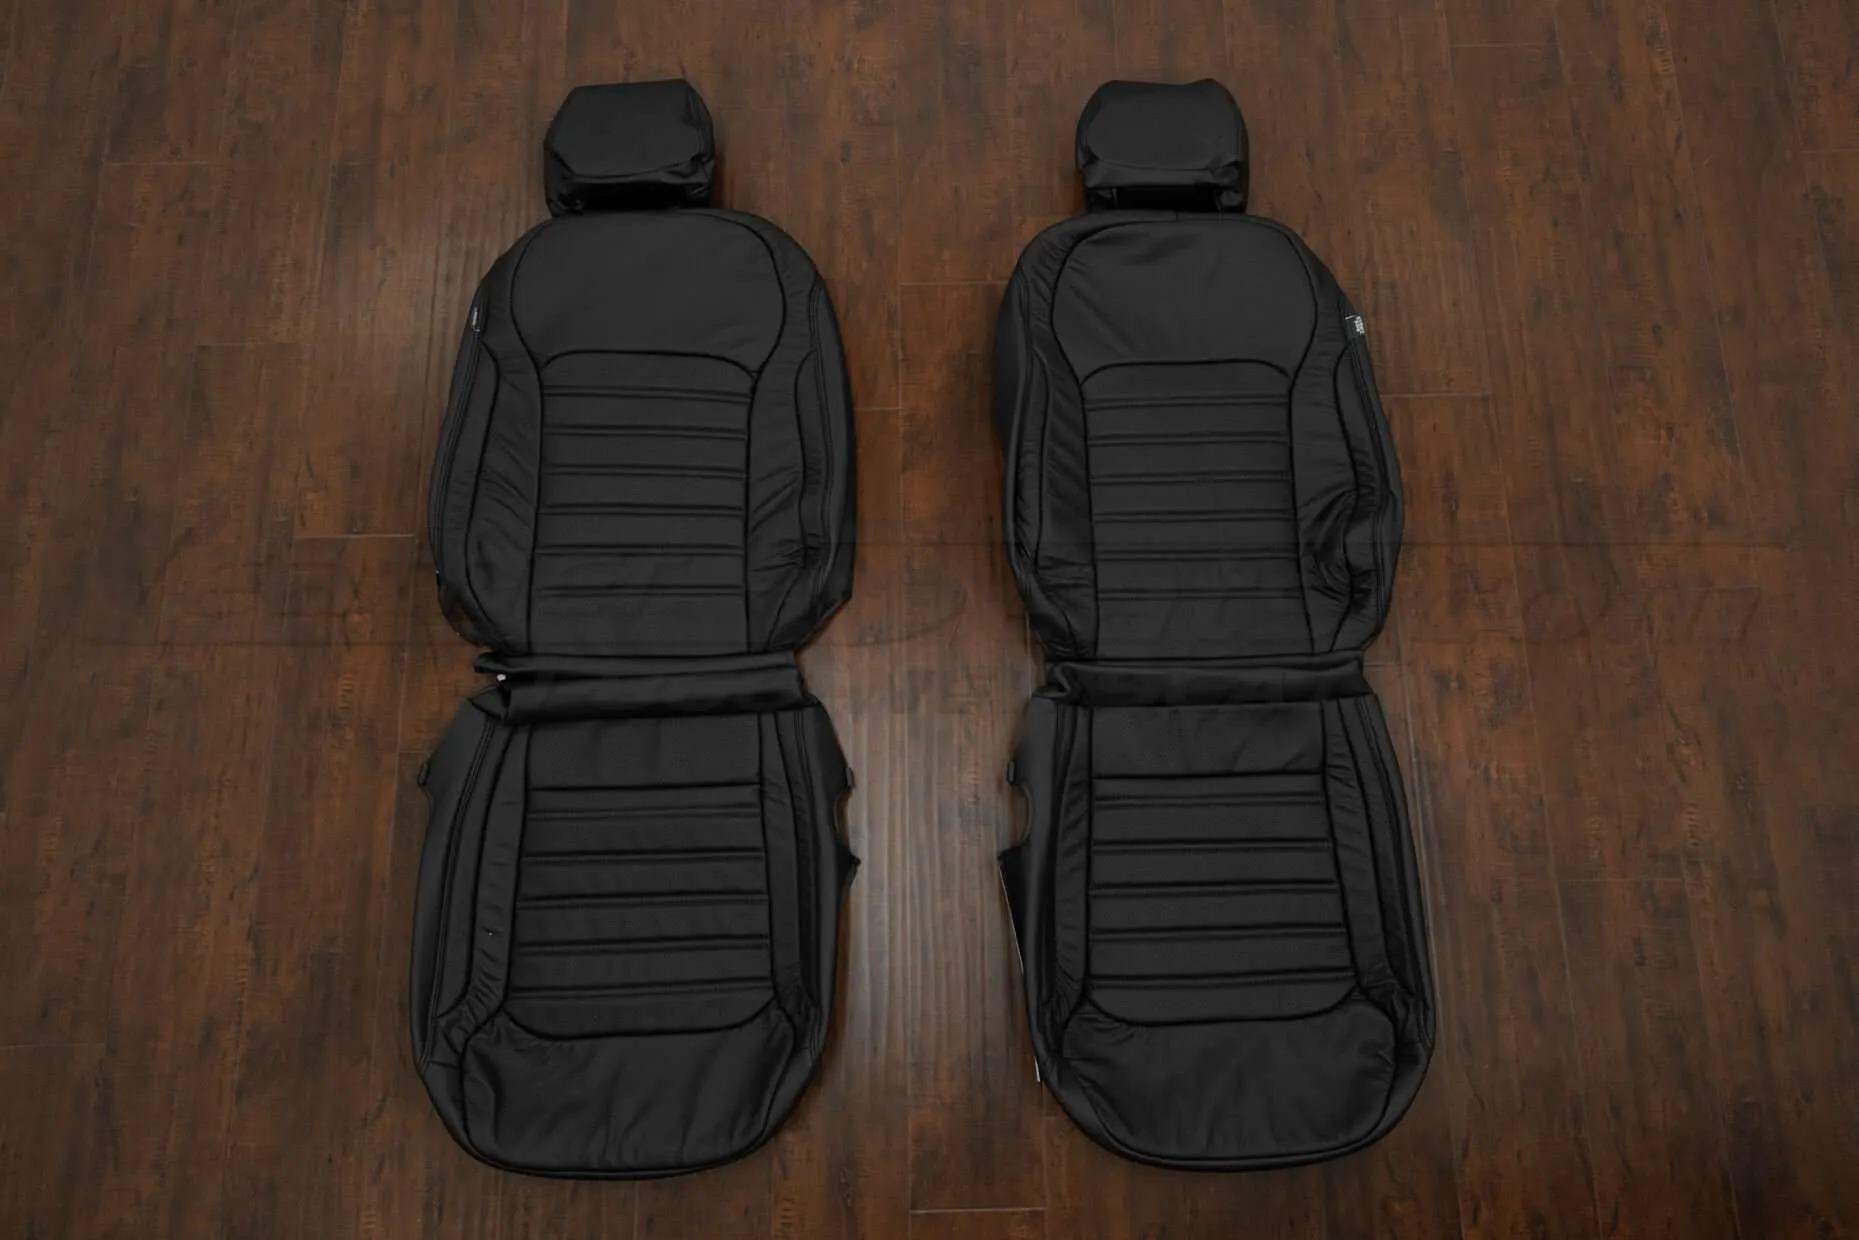 Volgswagon Passat Leather Seat Kit - Black - Front seat upholstery